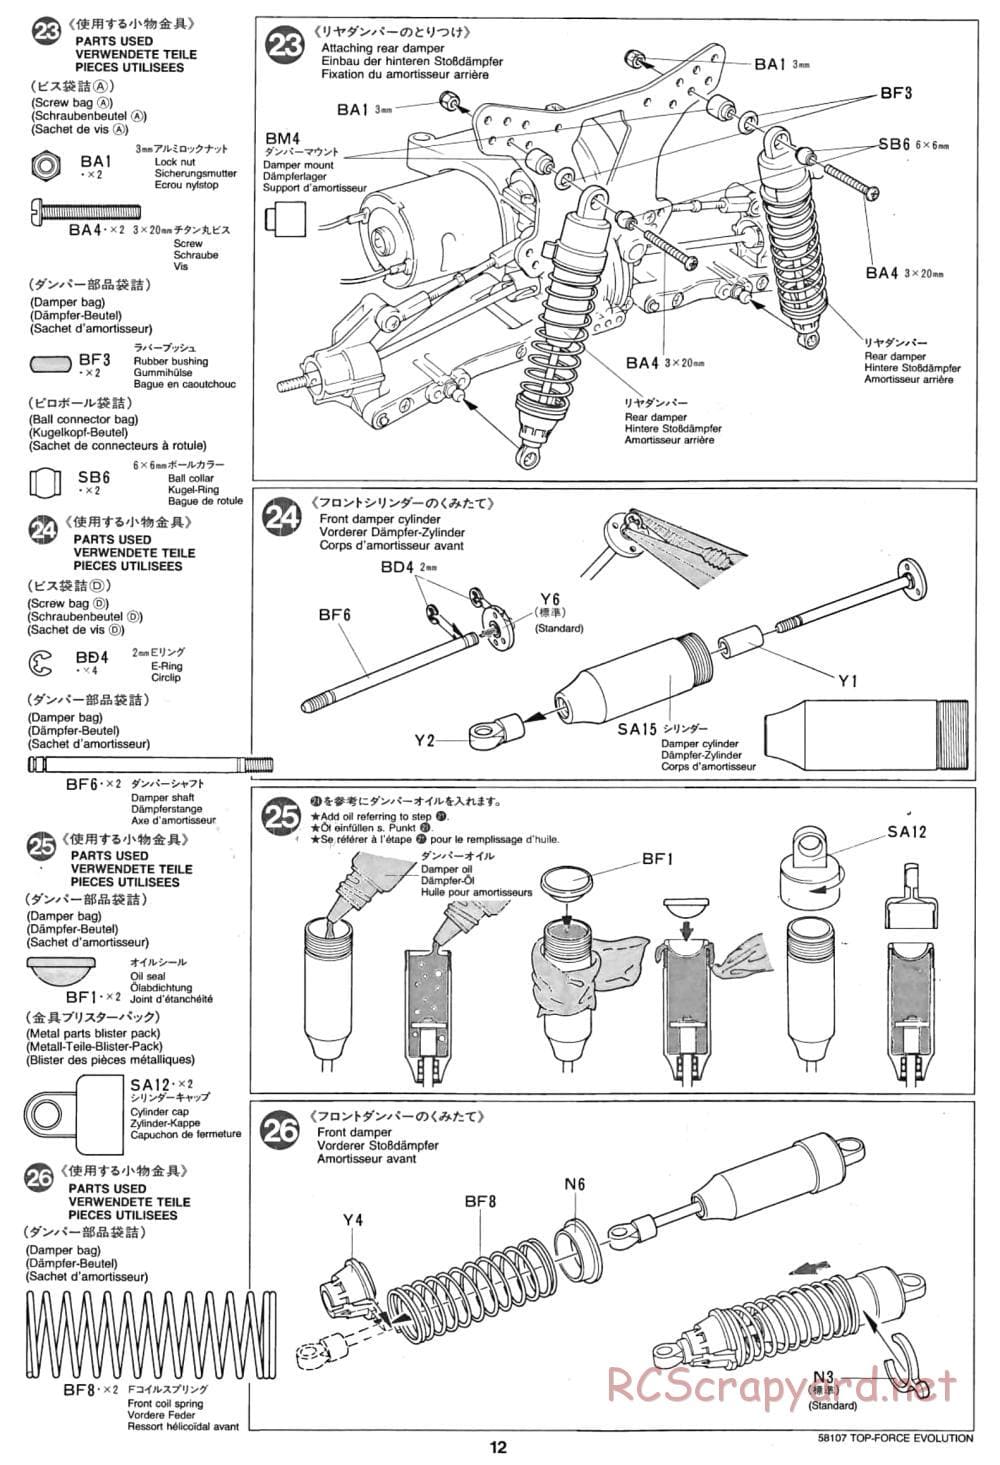 Tamiya - Top Force Evolution Chassis - Manual - Page 12